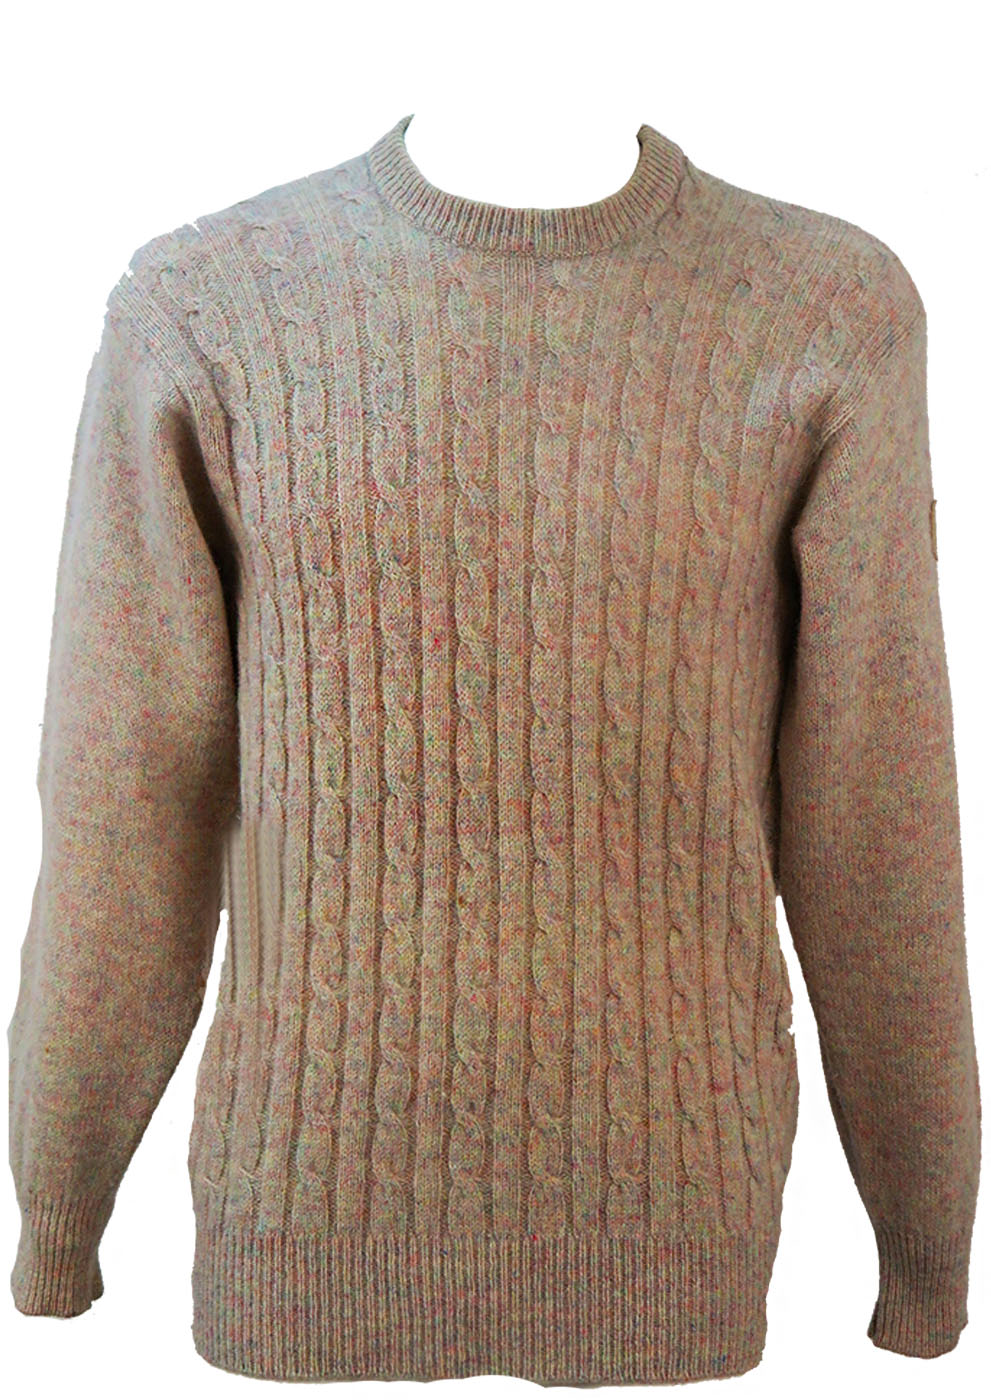 Trussardi Virgin Wool Cream & Pastel Fleck Cable Knit Jumper - M ...